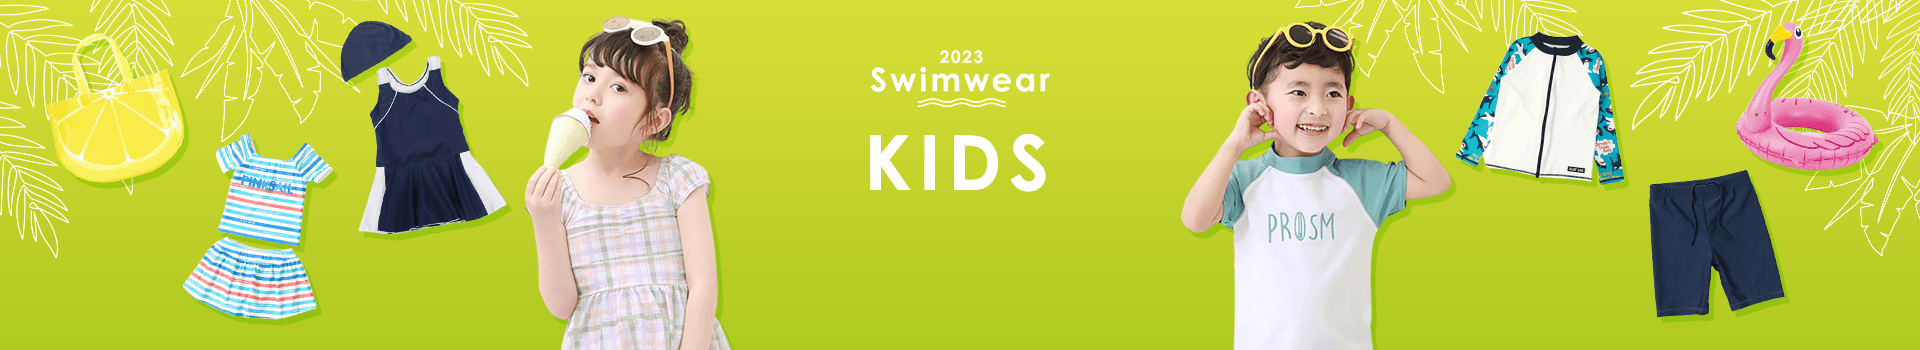 KIDS 2023 Swimwear